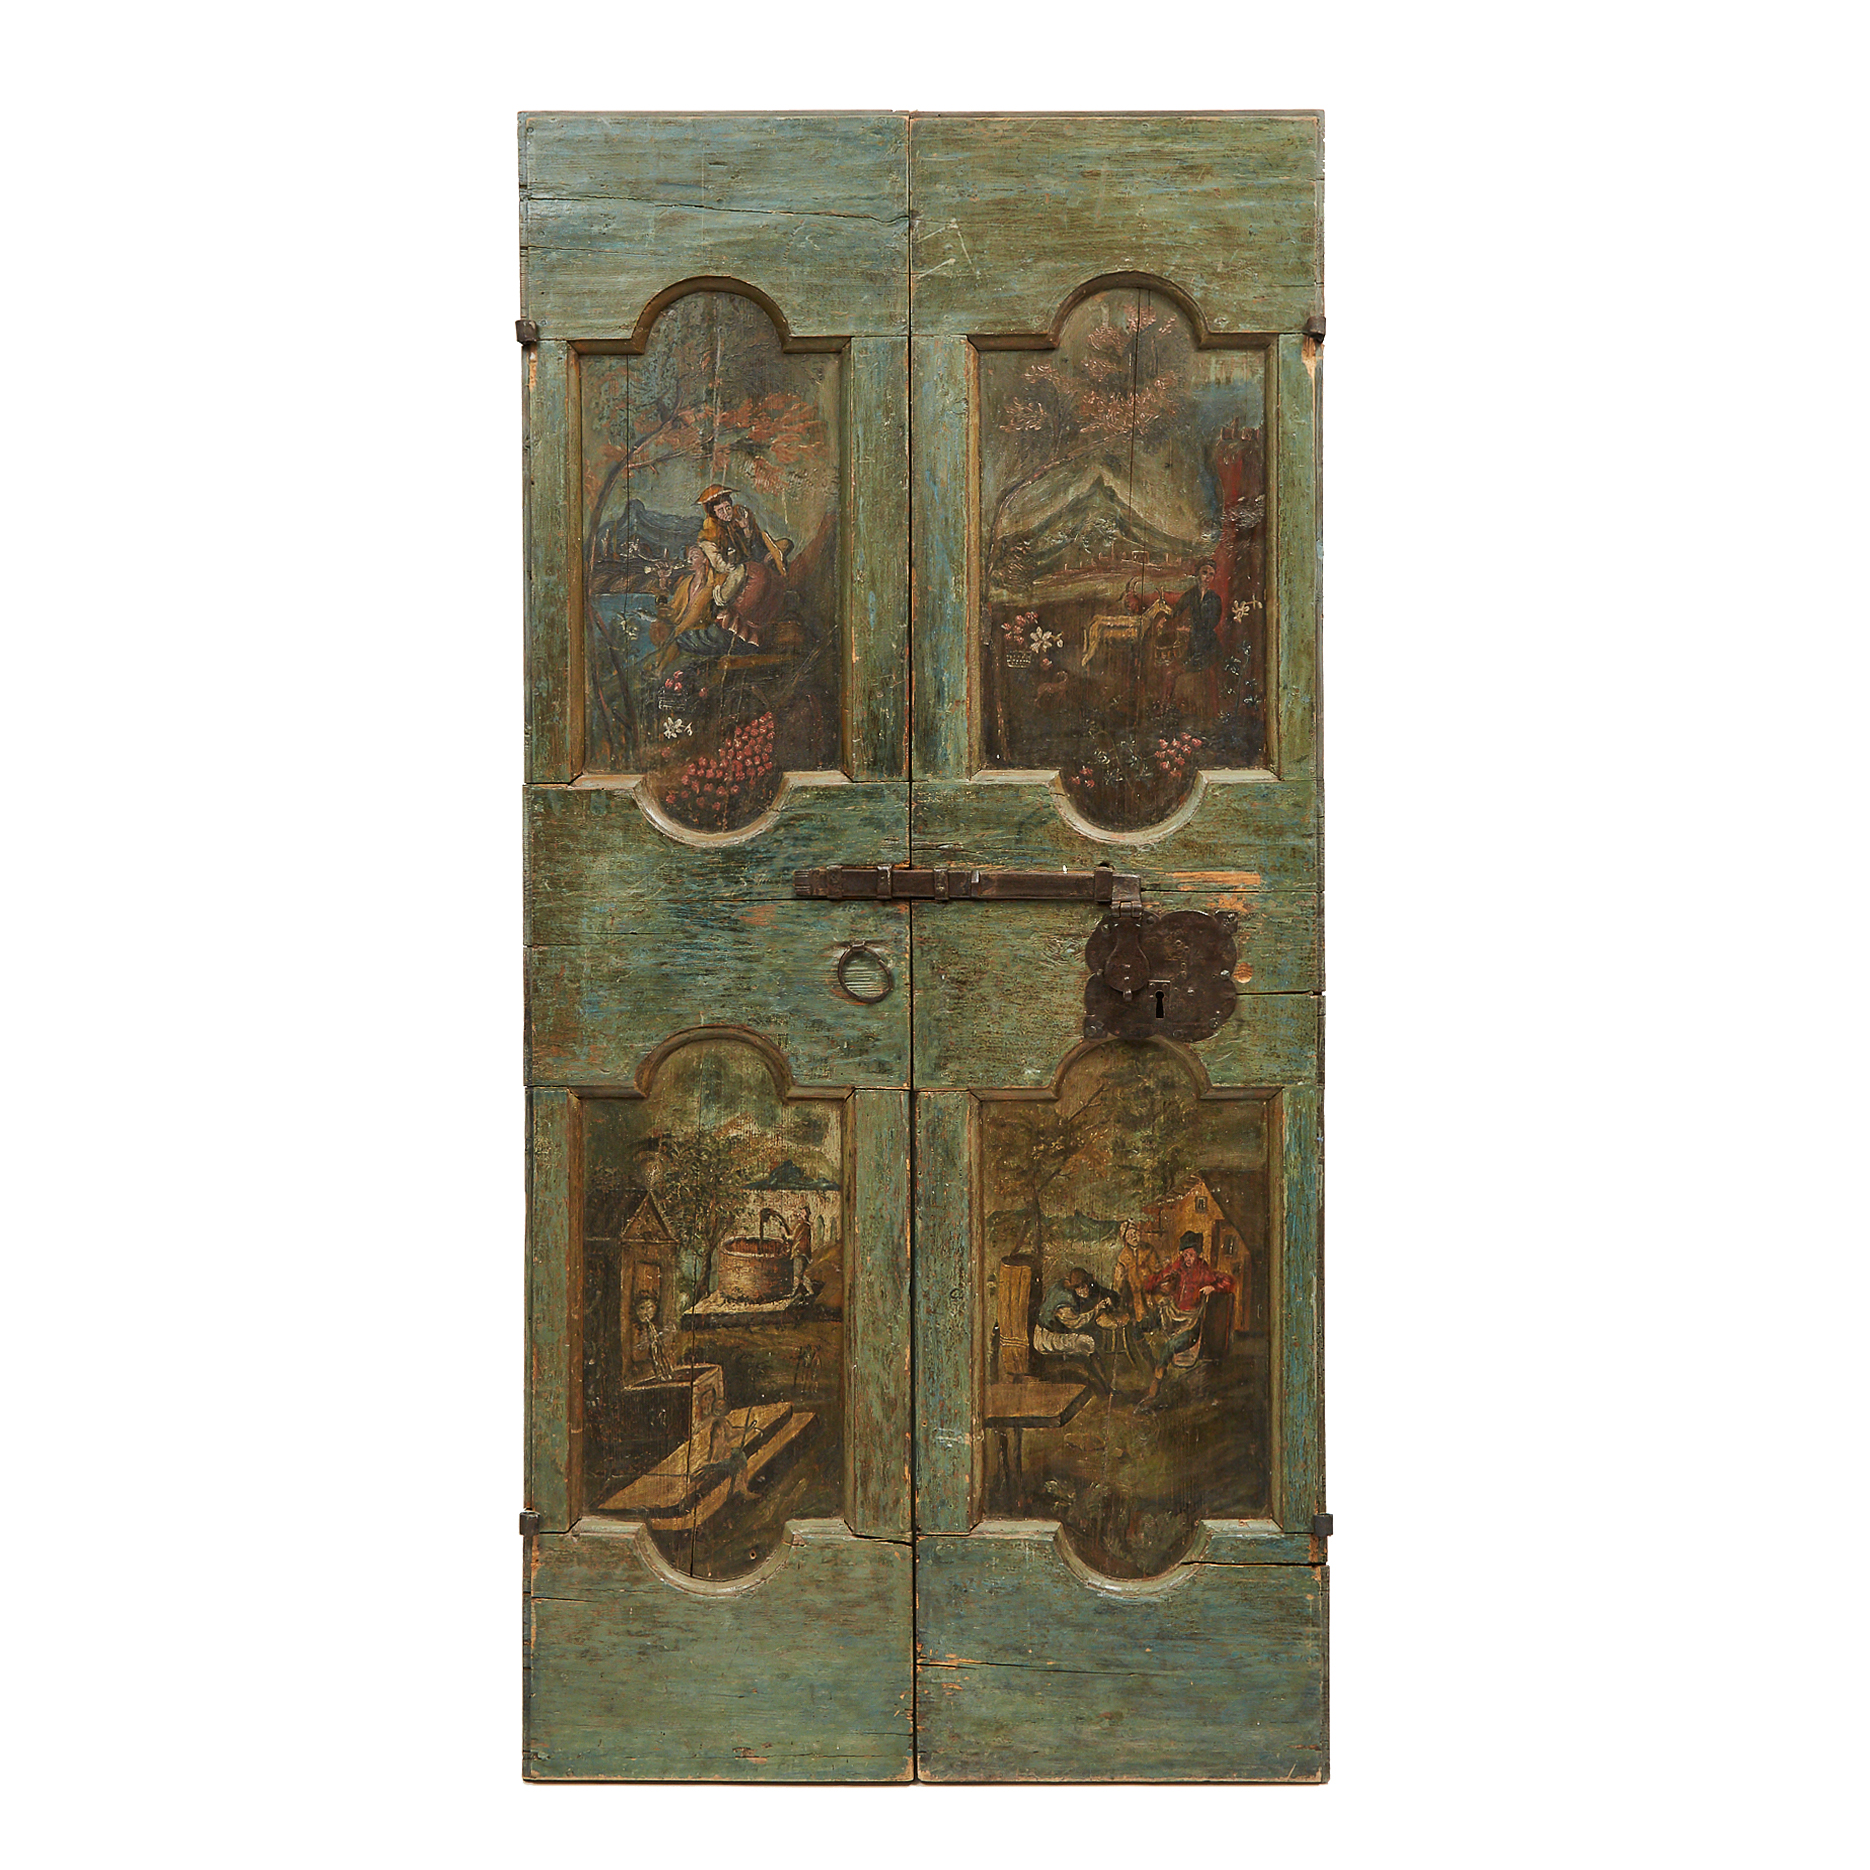 Pair of Venetian Painted Panelled Double Doors, 18th century